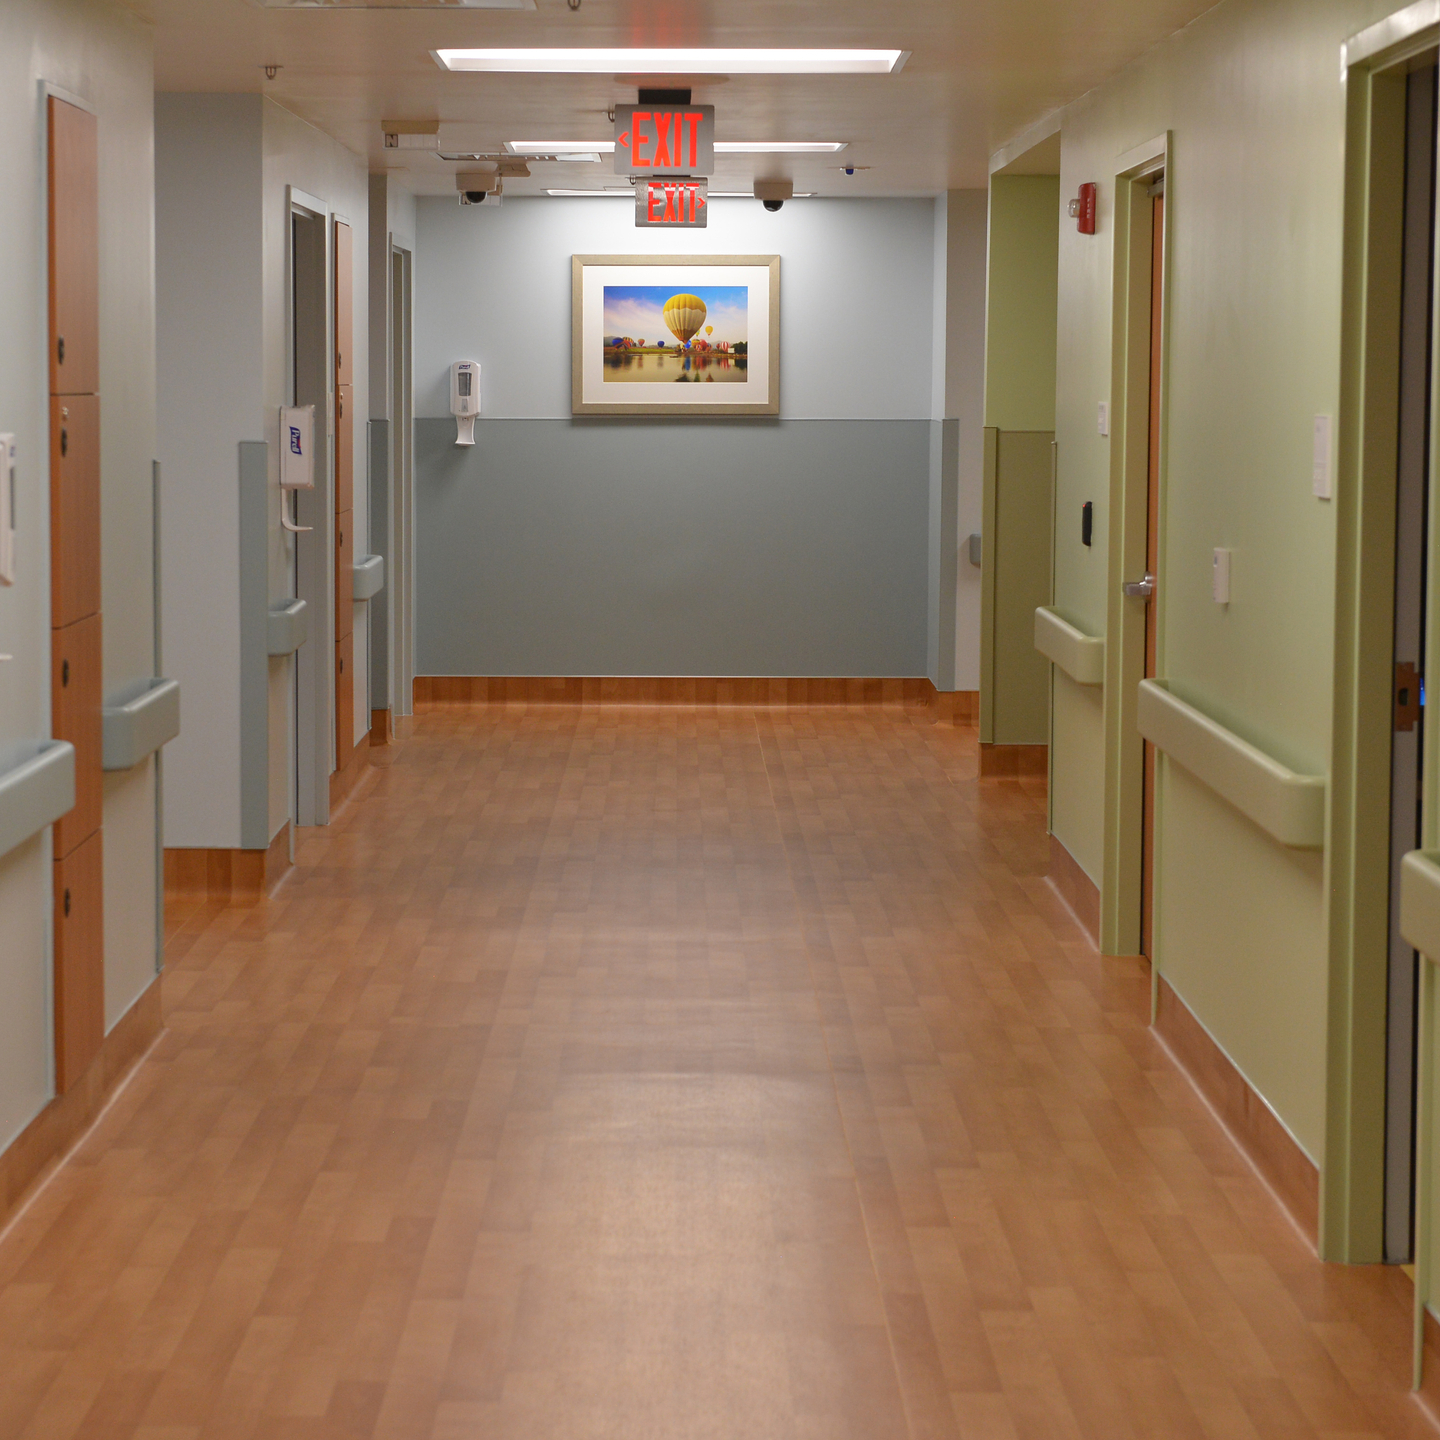 Pediatric Oncology Hallway